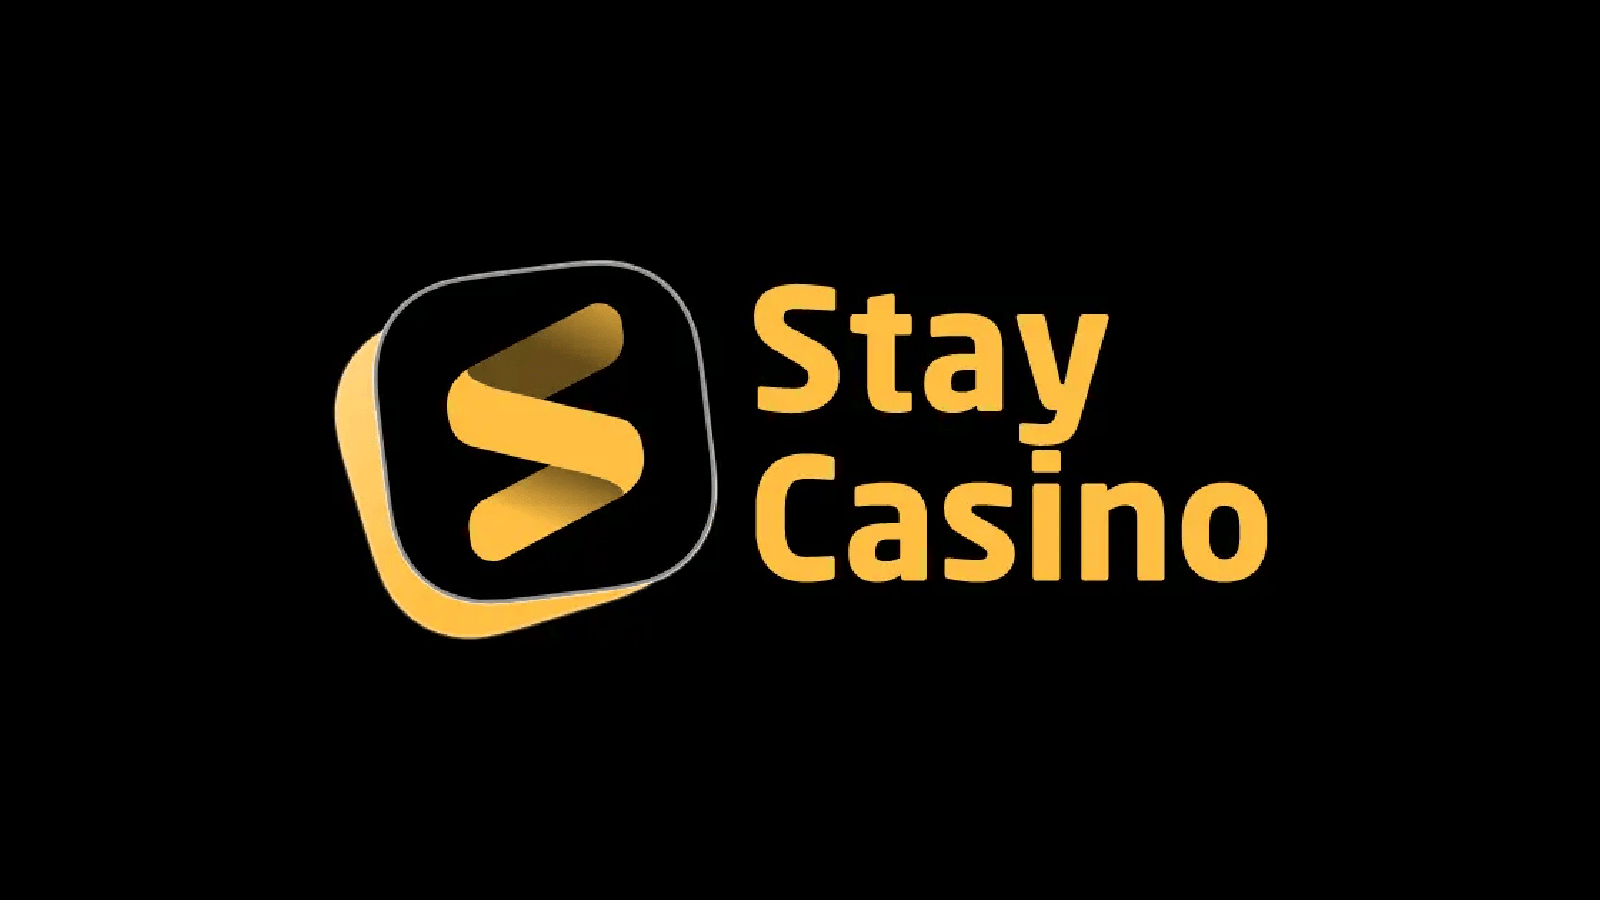 StayCasino Review - Premier Online Gaming Platform